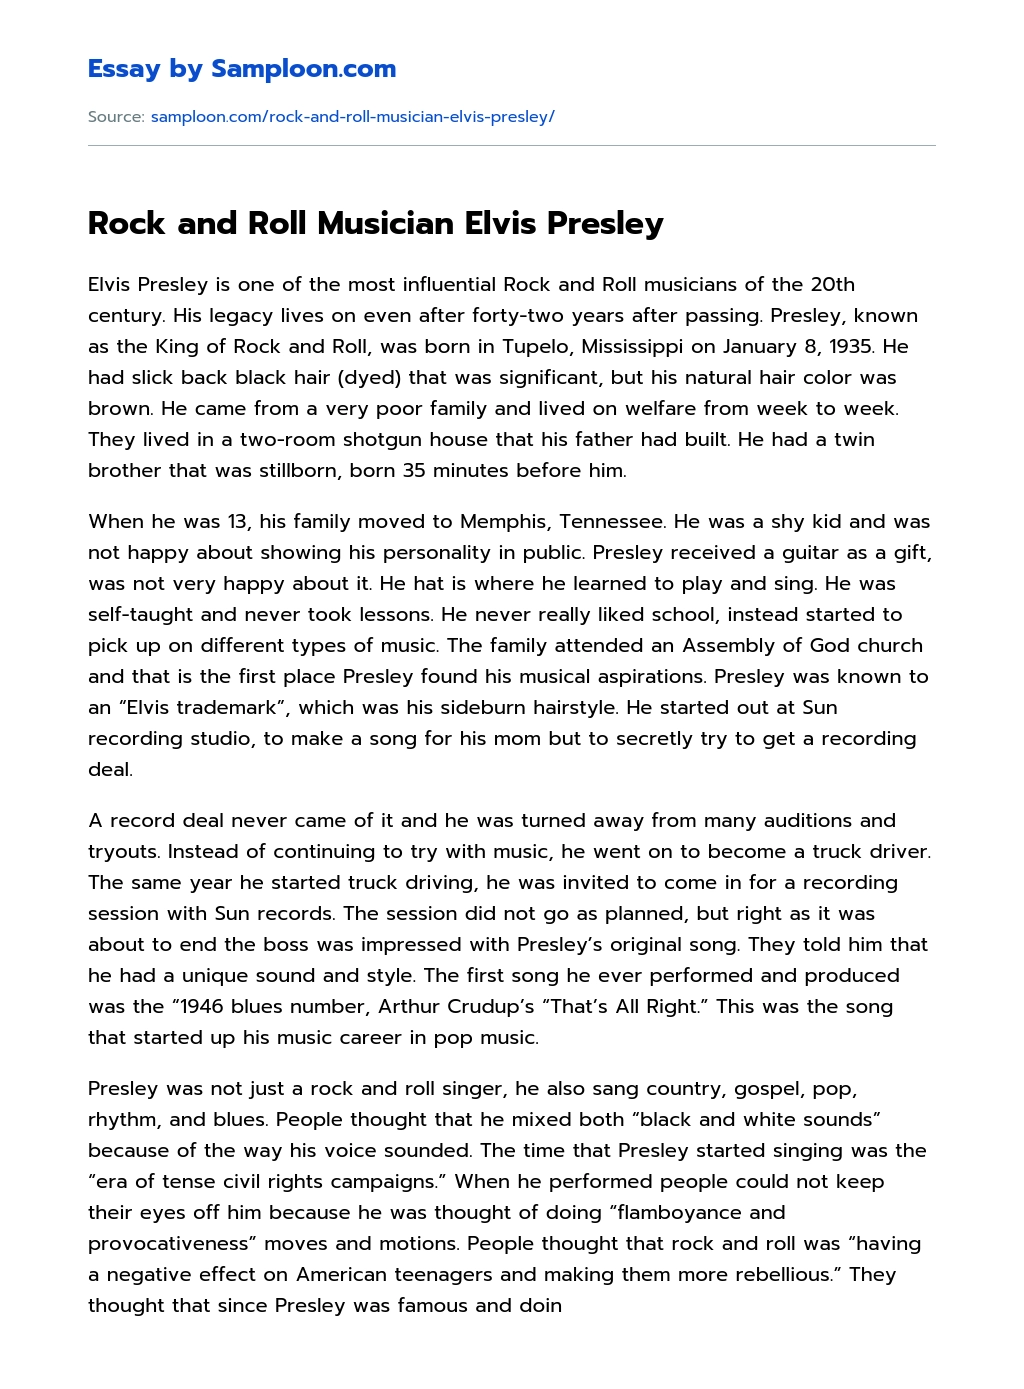 Rock and Roll Musician Elvis Presley Personal Essay essay